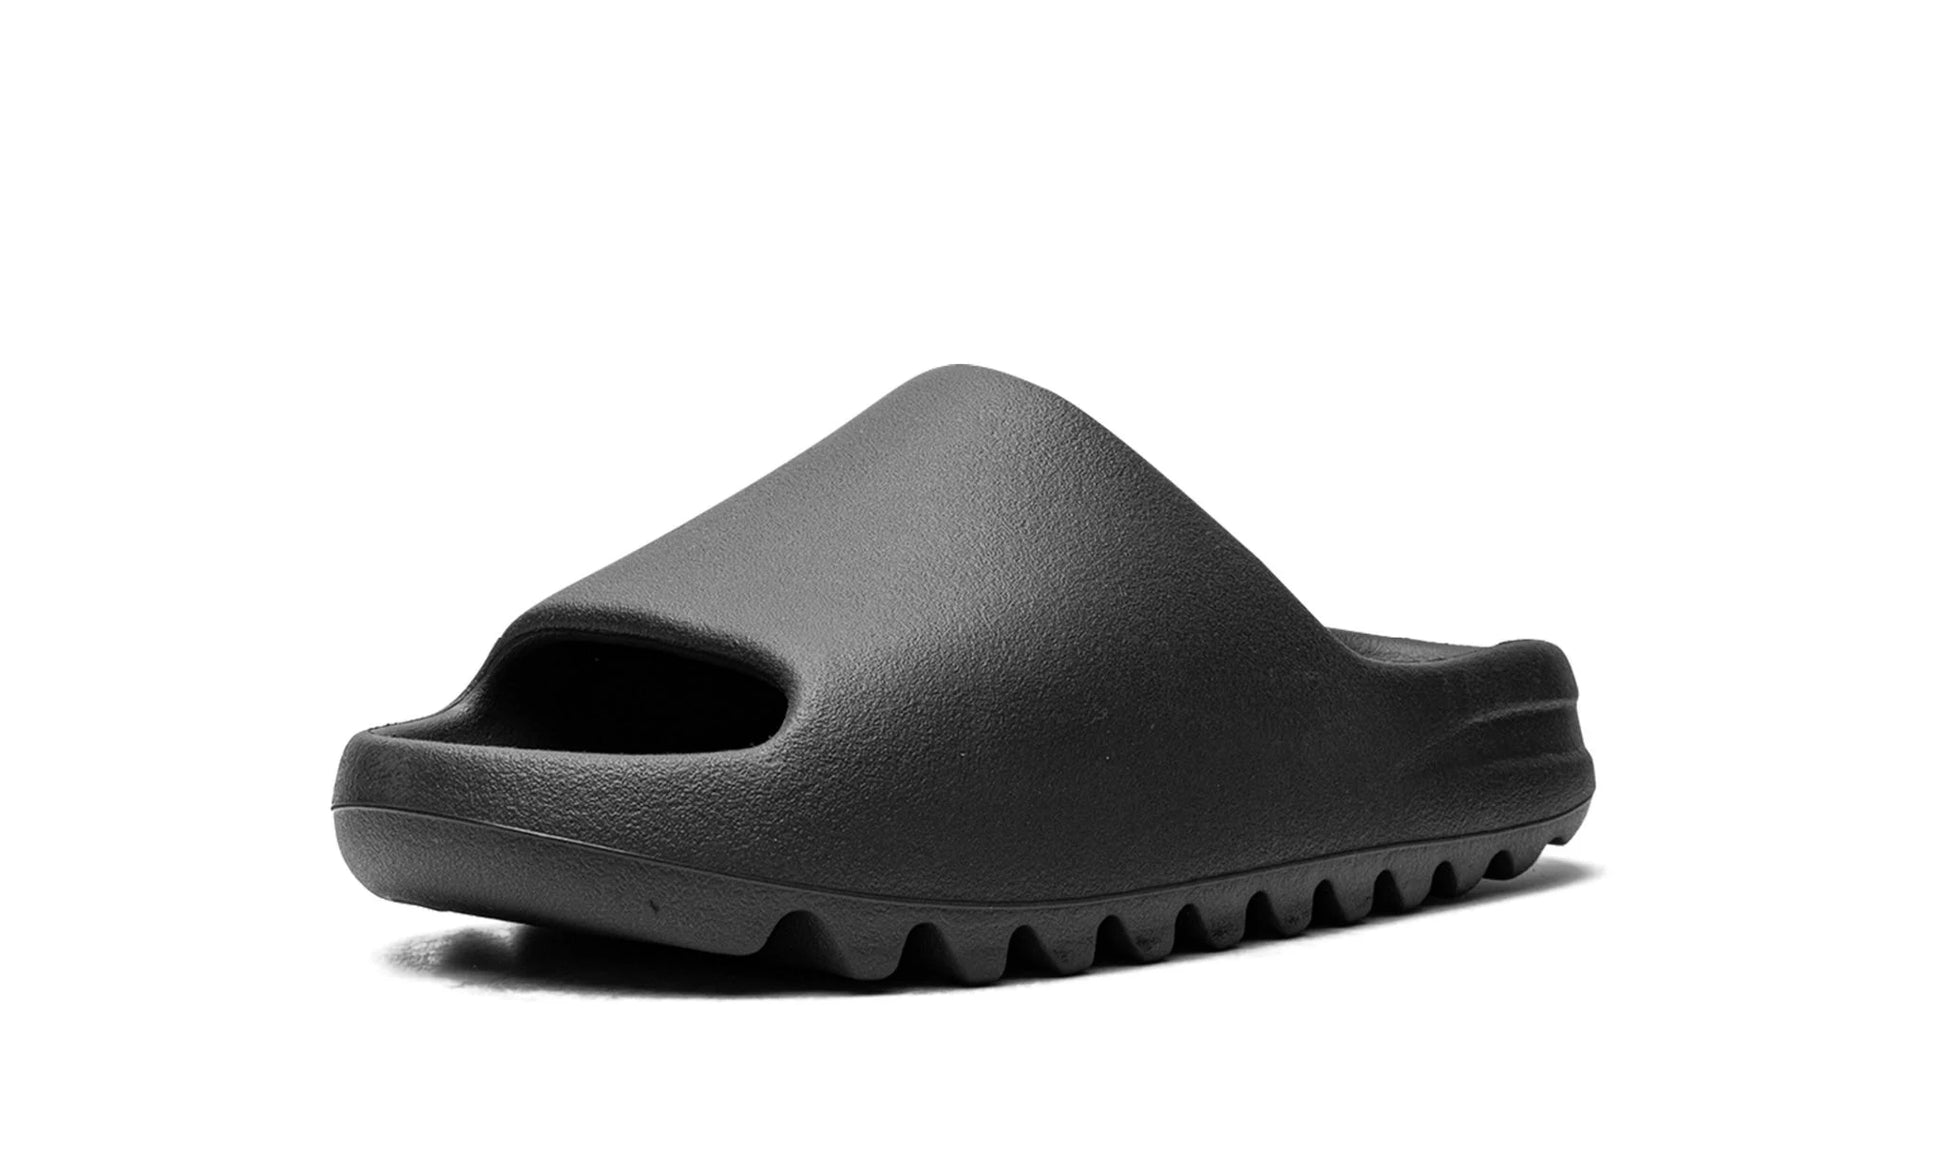 Yeezy Slide Onyx Single Shoe Front View